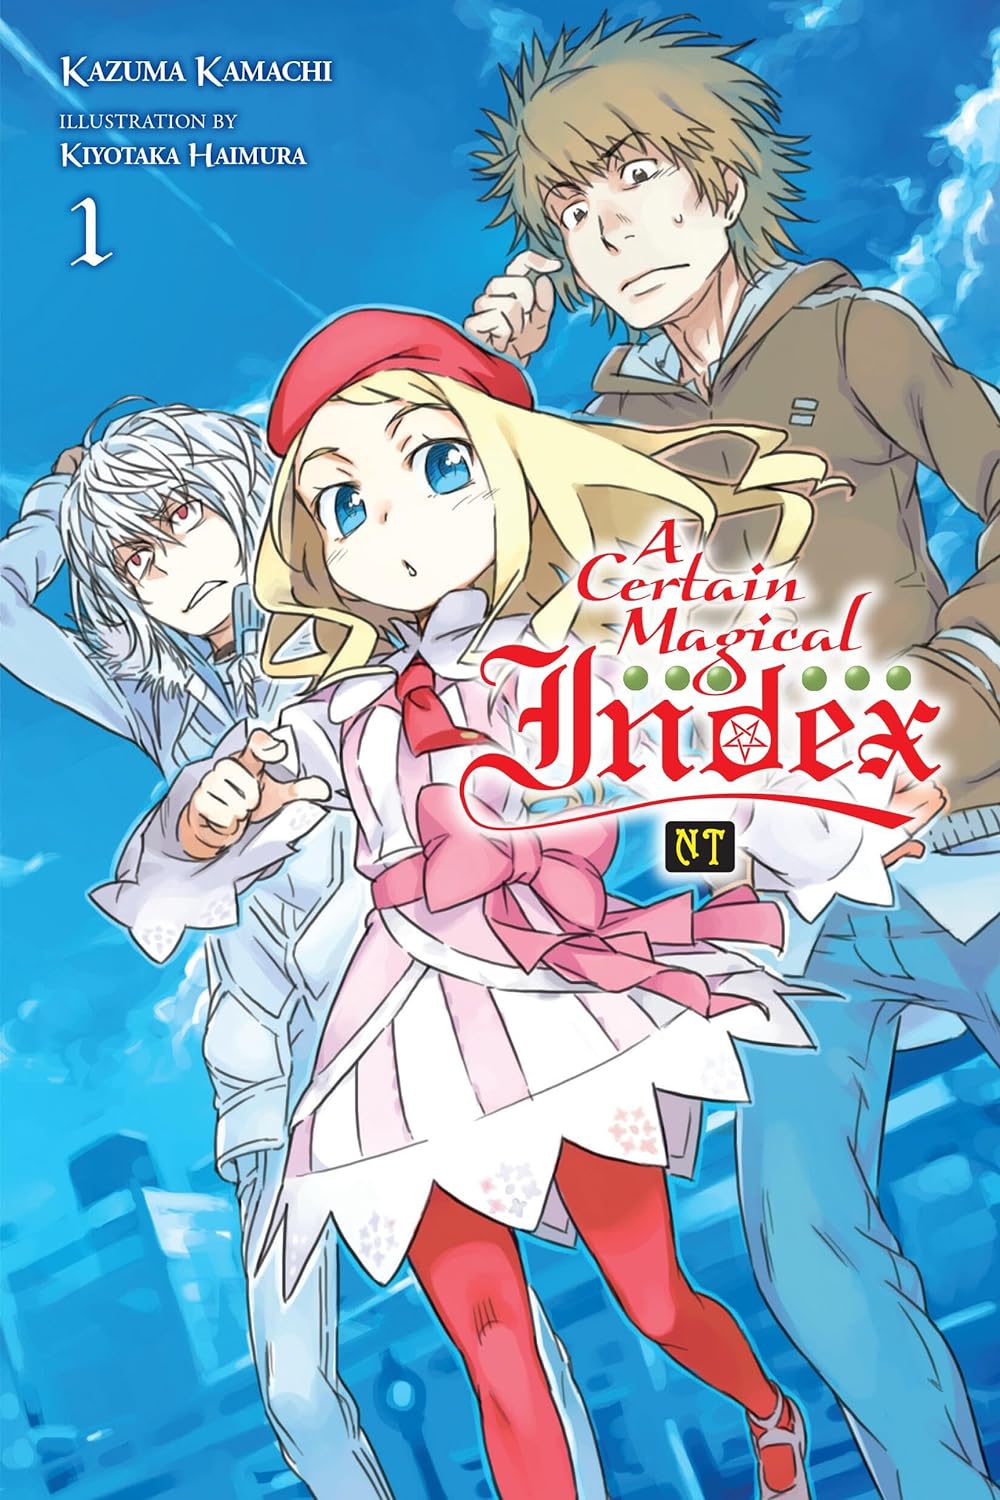 A Certain Magical Index Nt Vol. 01 (Light Novel)